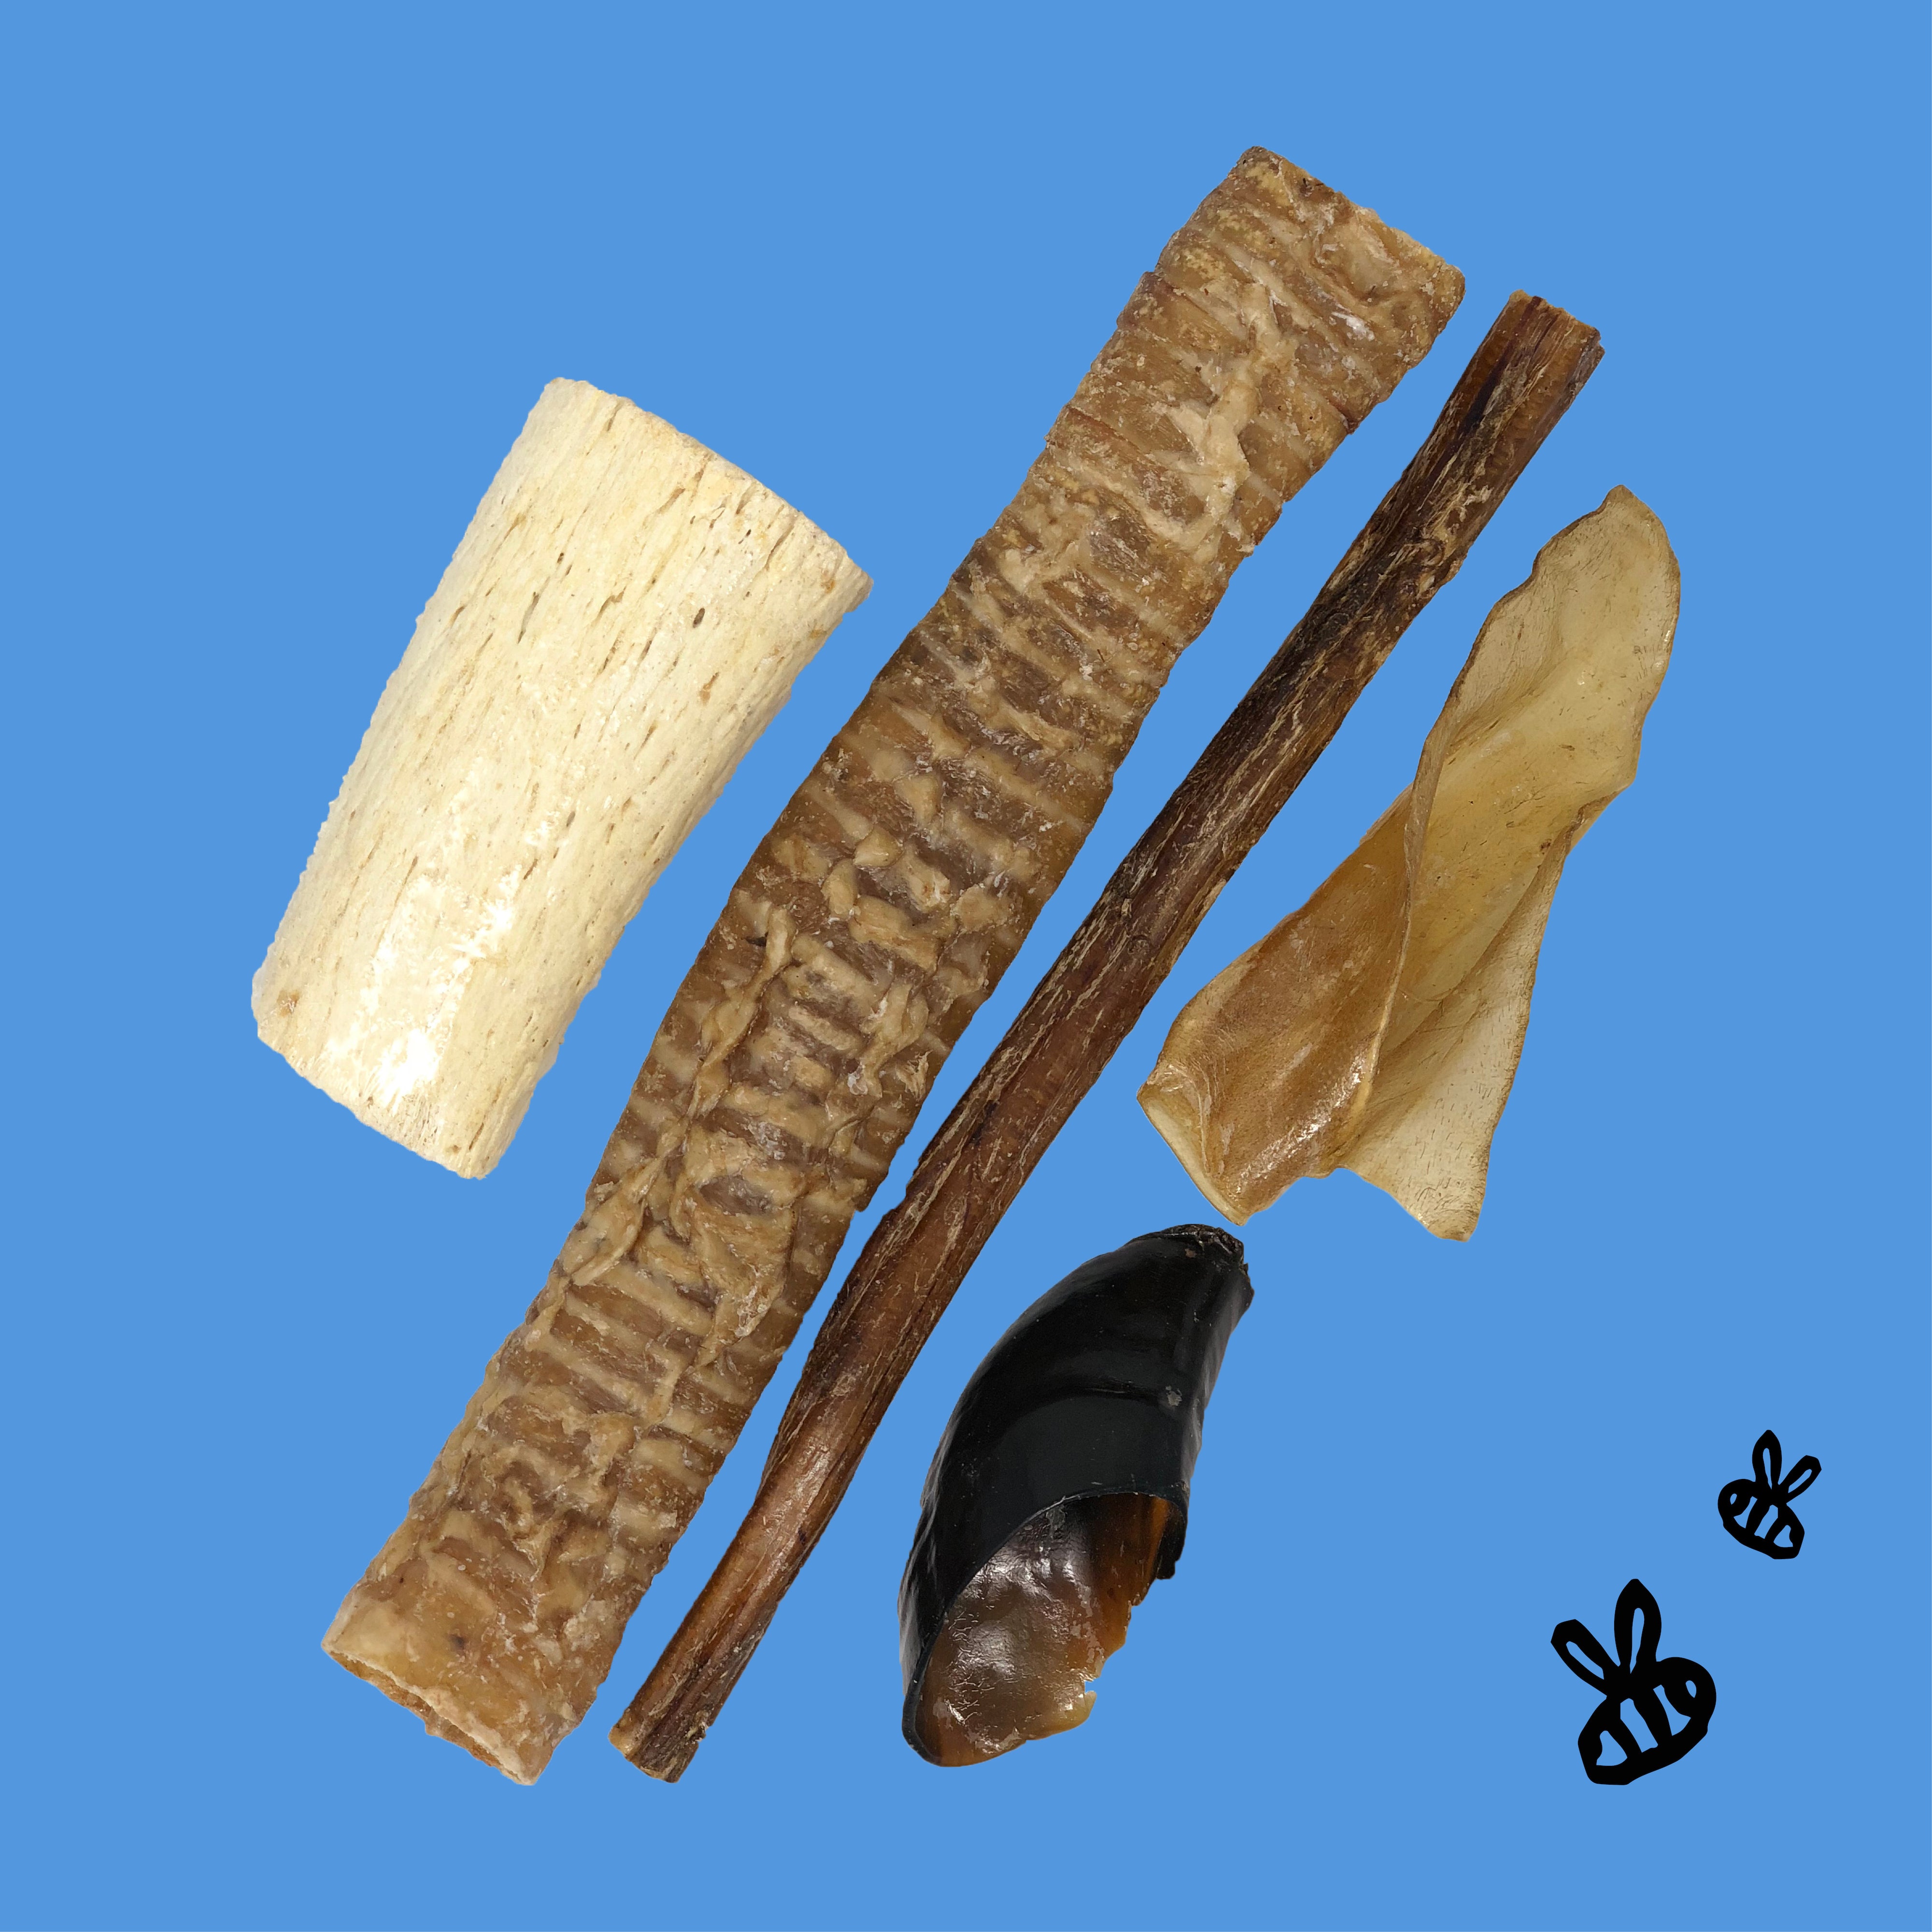 trachea tube, 12" bully stick, 6" horn core, crunchy ear, hoof on blue background w/ black bees.

